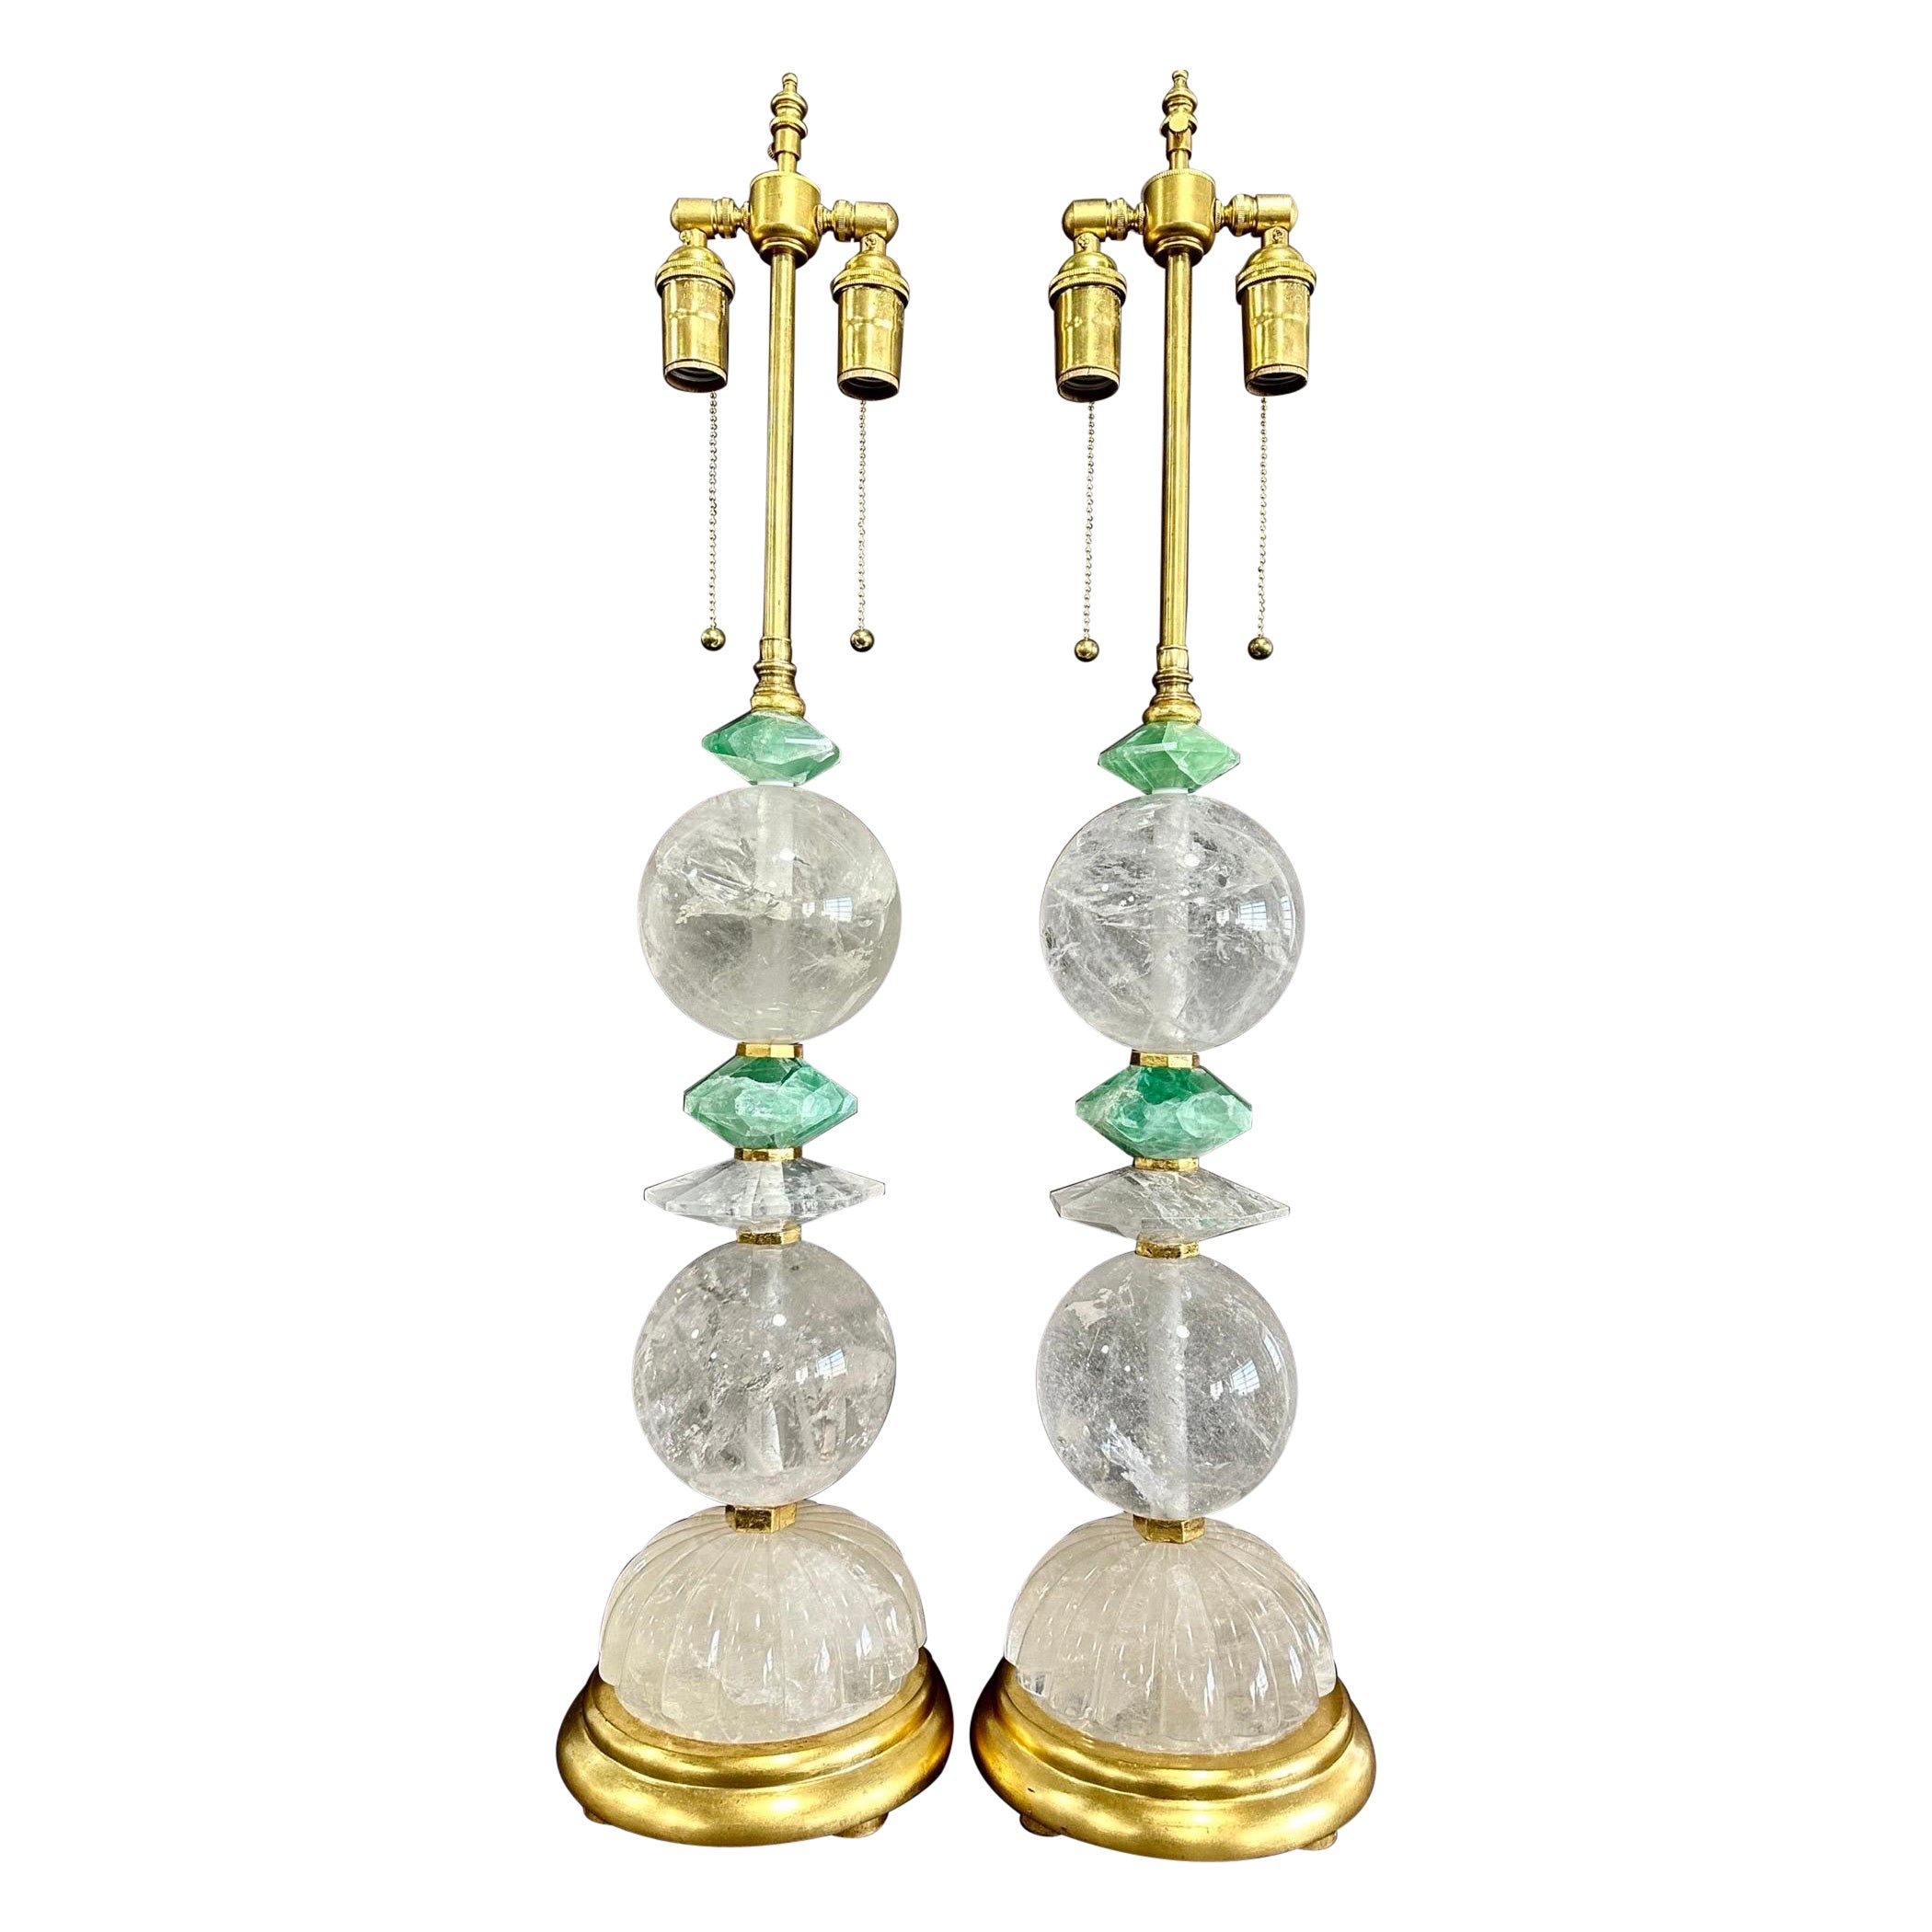 Wonderful Pair Mid Century Modern Style Rock Crystal Green Quartz Gold Lamps